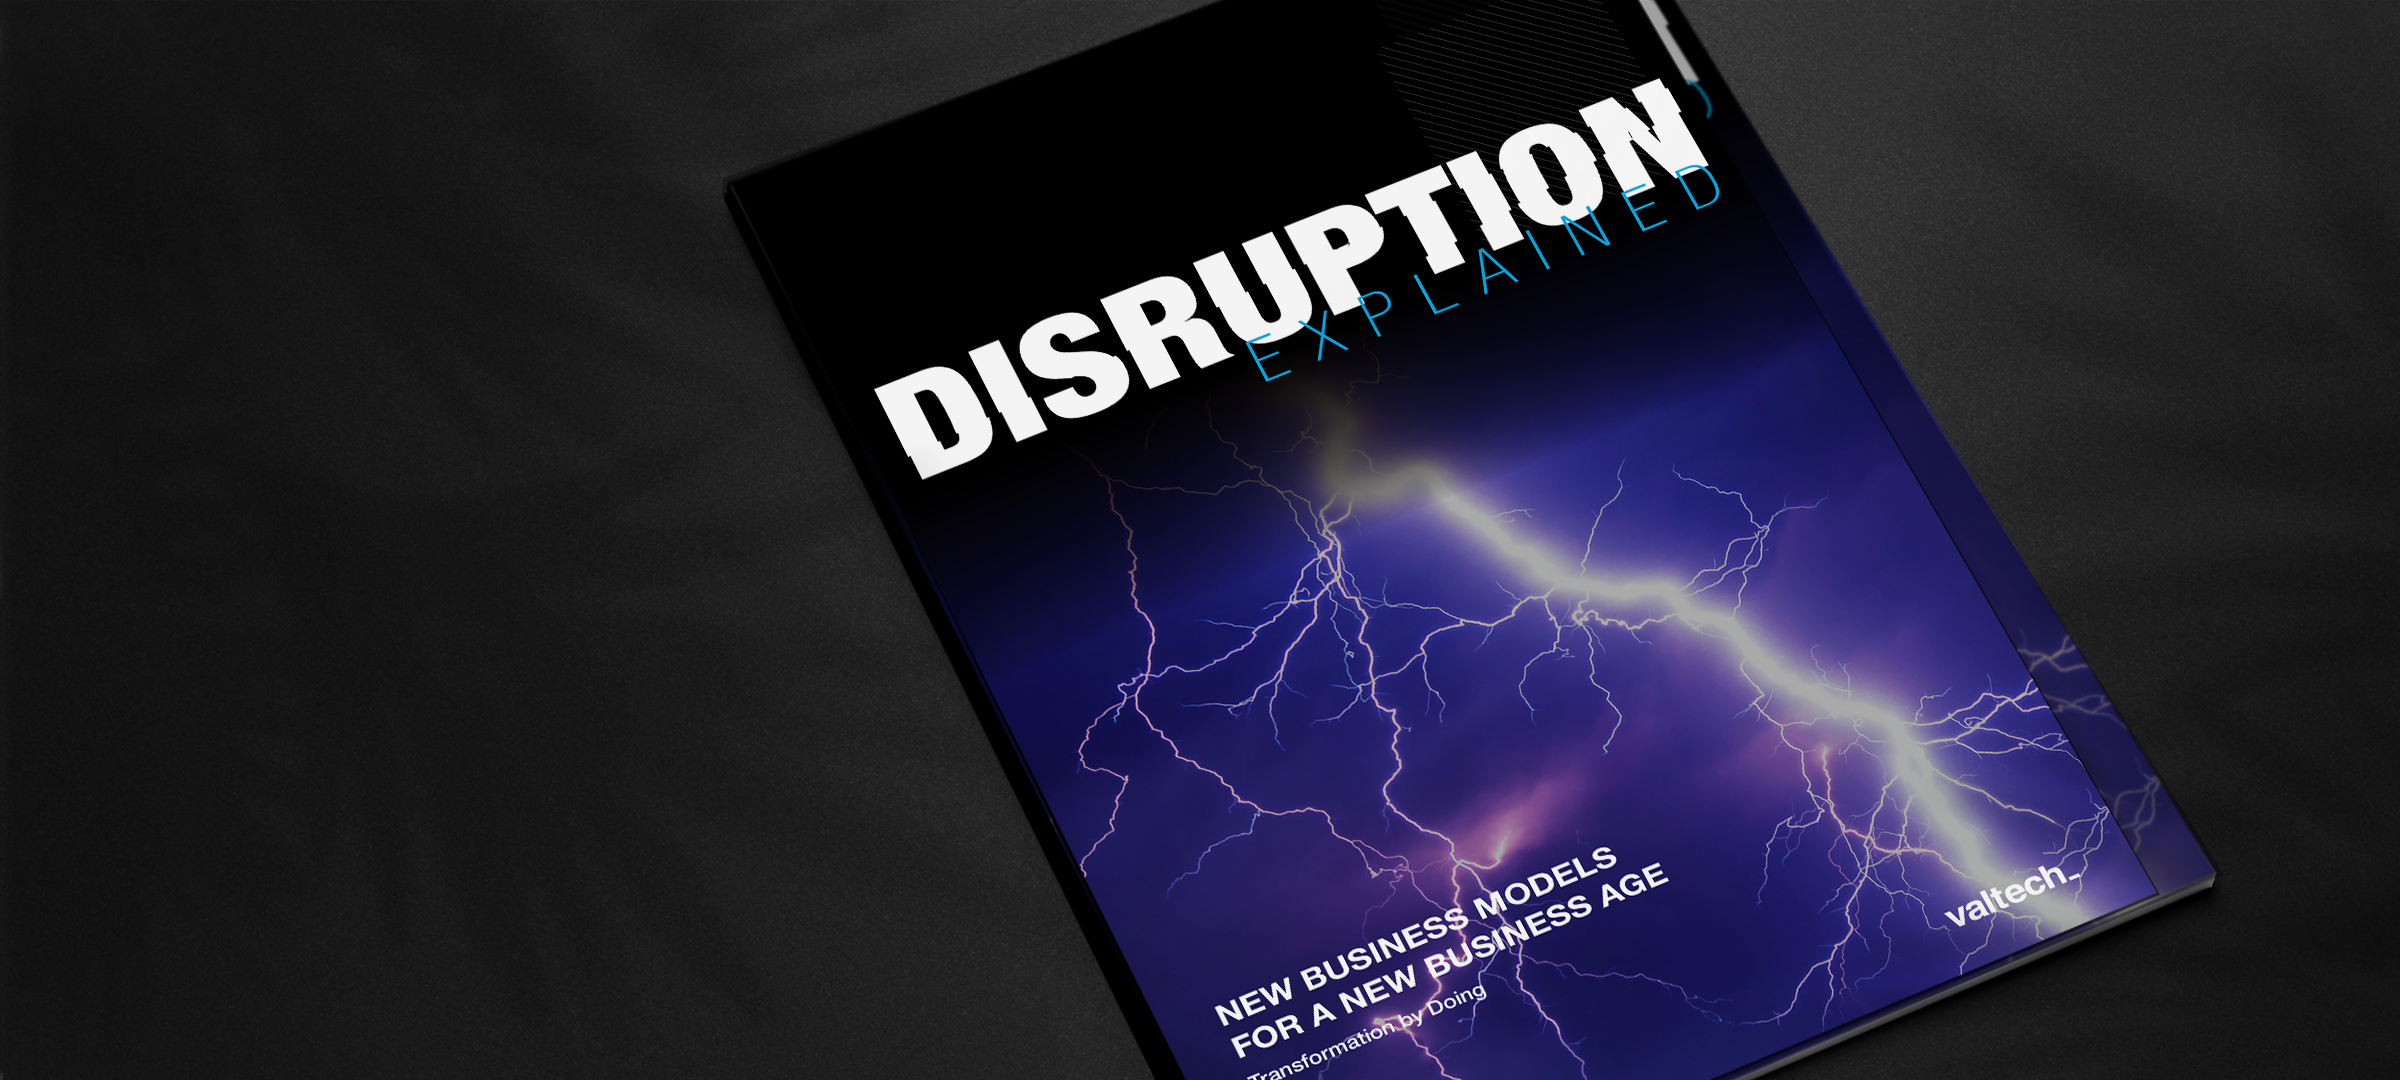 Disruption Explained